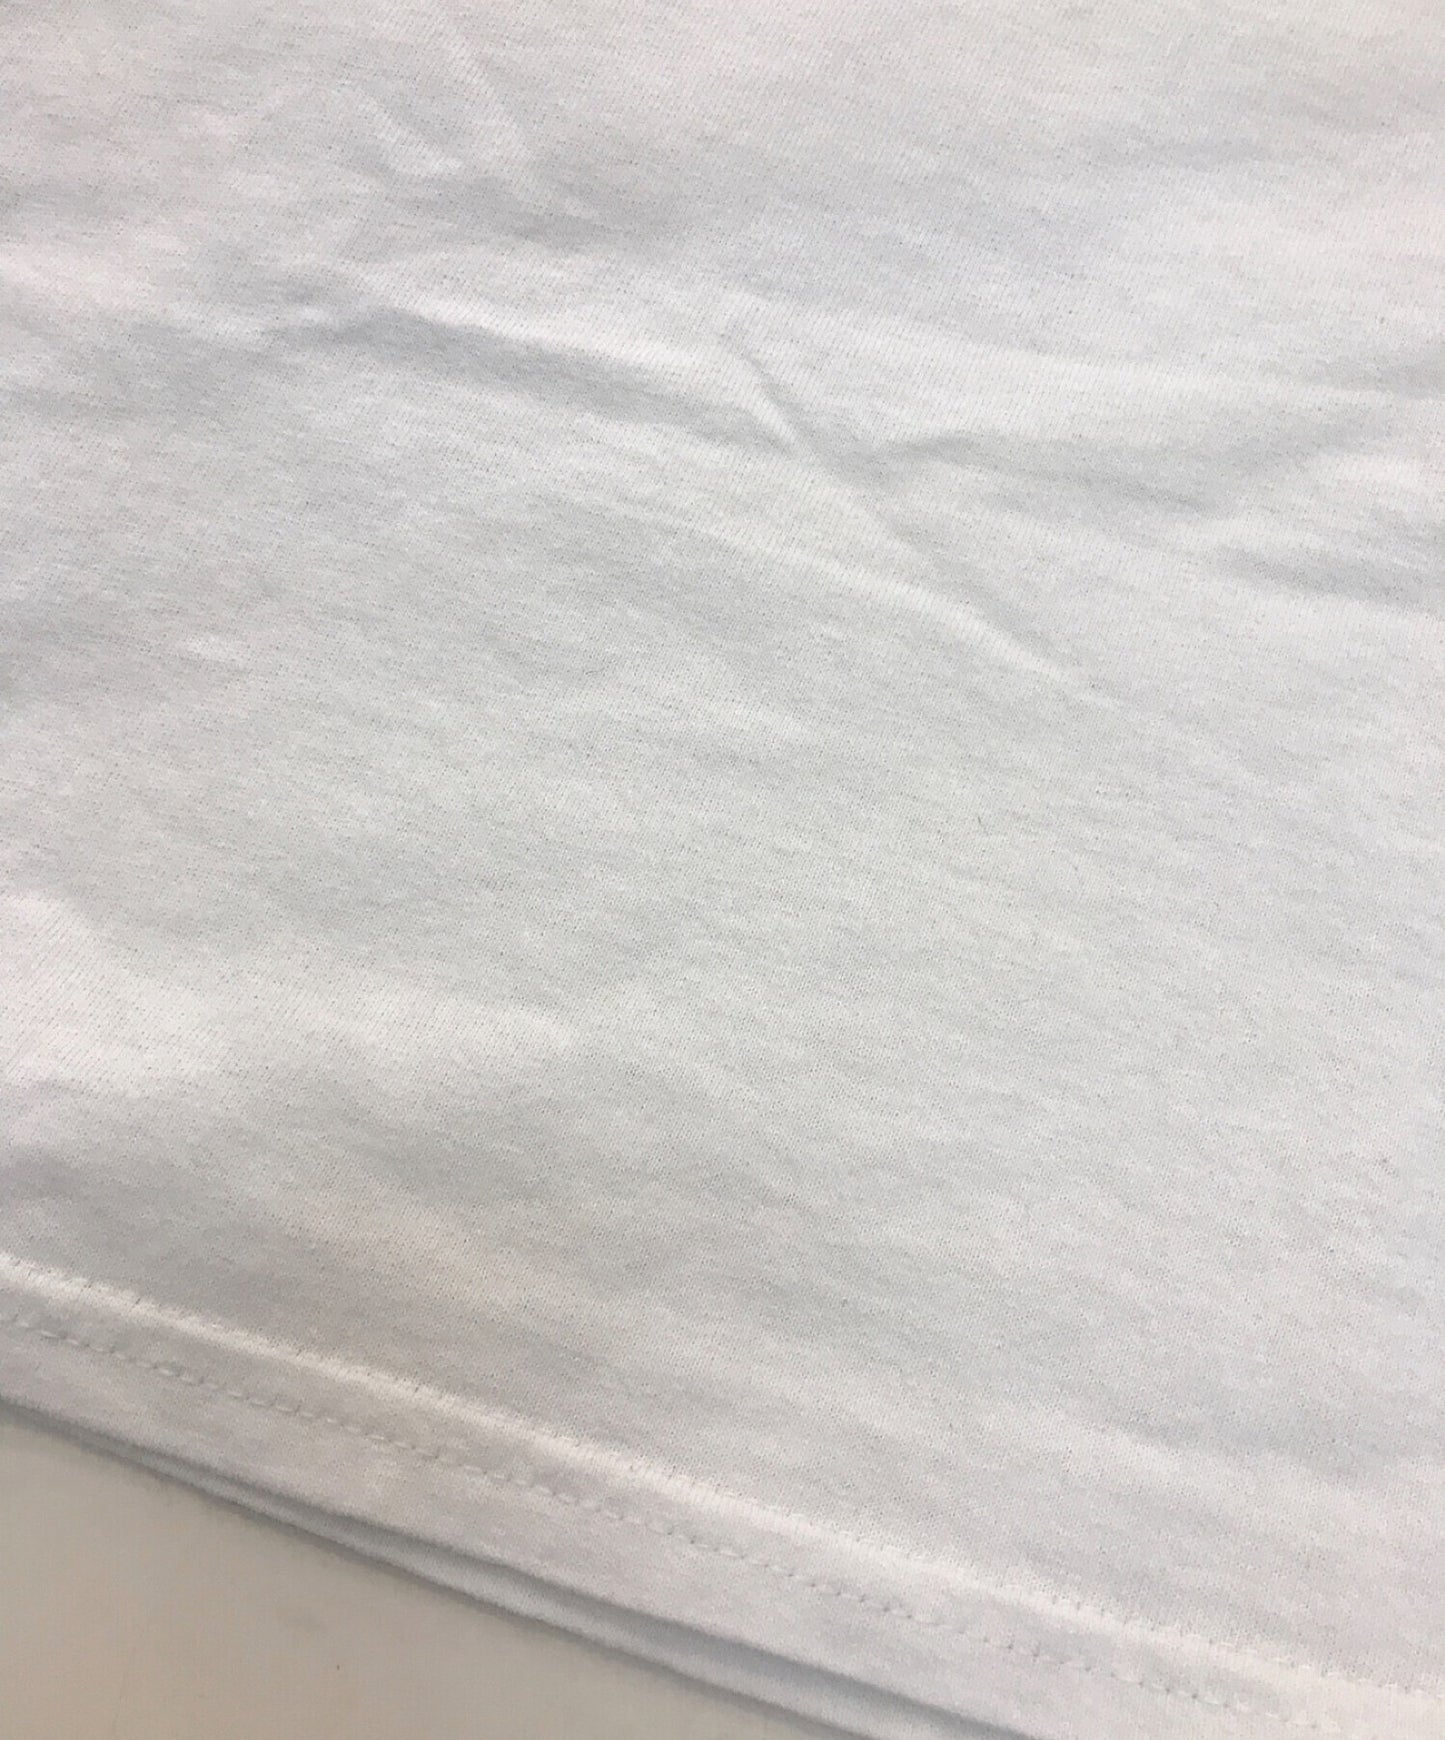 THUNDERBOLT PROJECT Printed T-shirt Raichu fragment&POKEMON